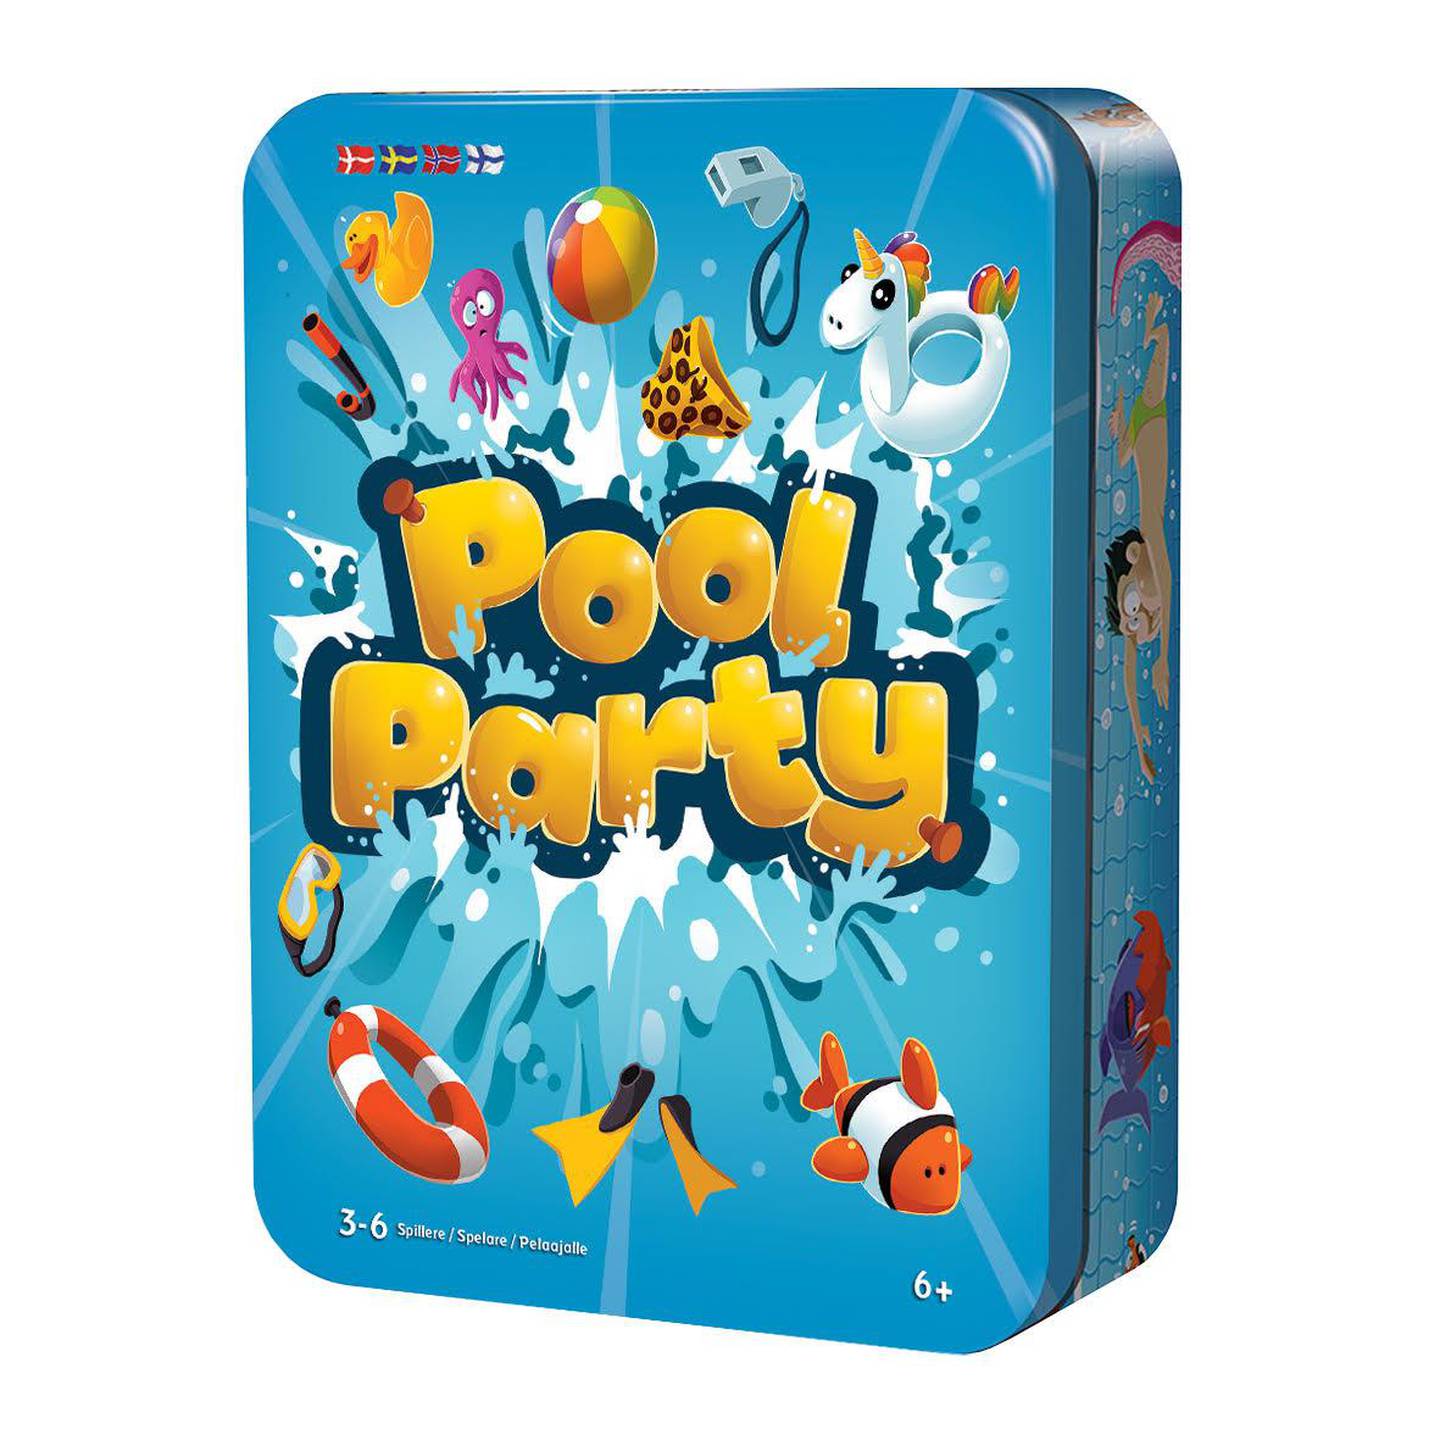 Pool Party er et spill der du kan bruke dine ufine sider. Her kan du nemlig dytte brikker ut i svømmebassenget. Foto: Cocktail games (Asmodee Nordics)